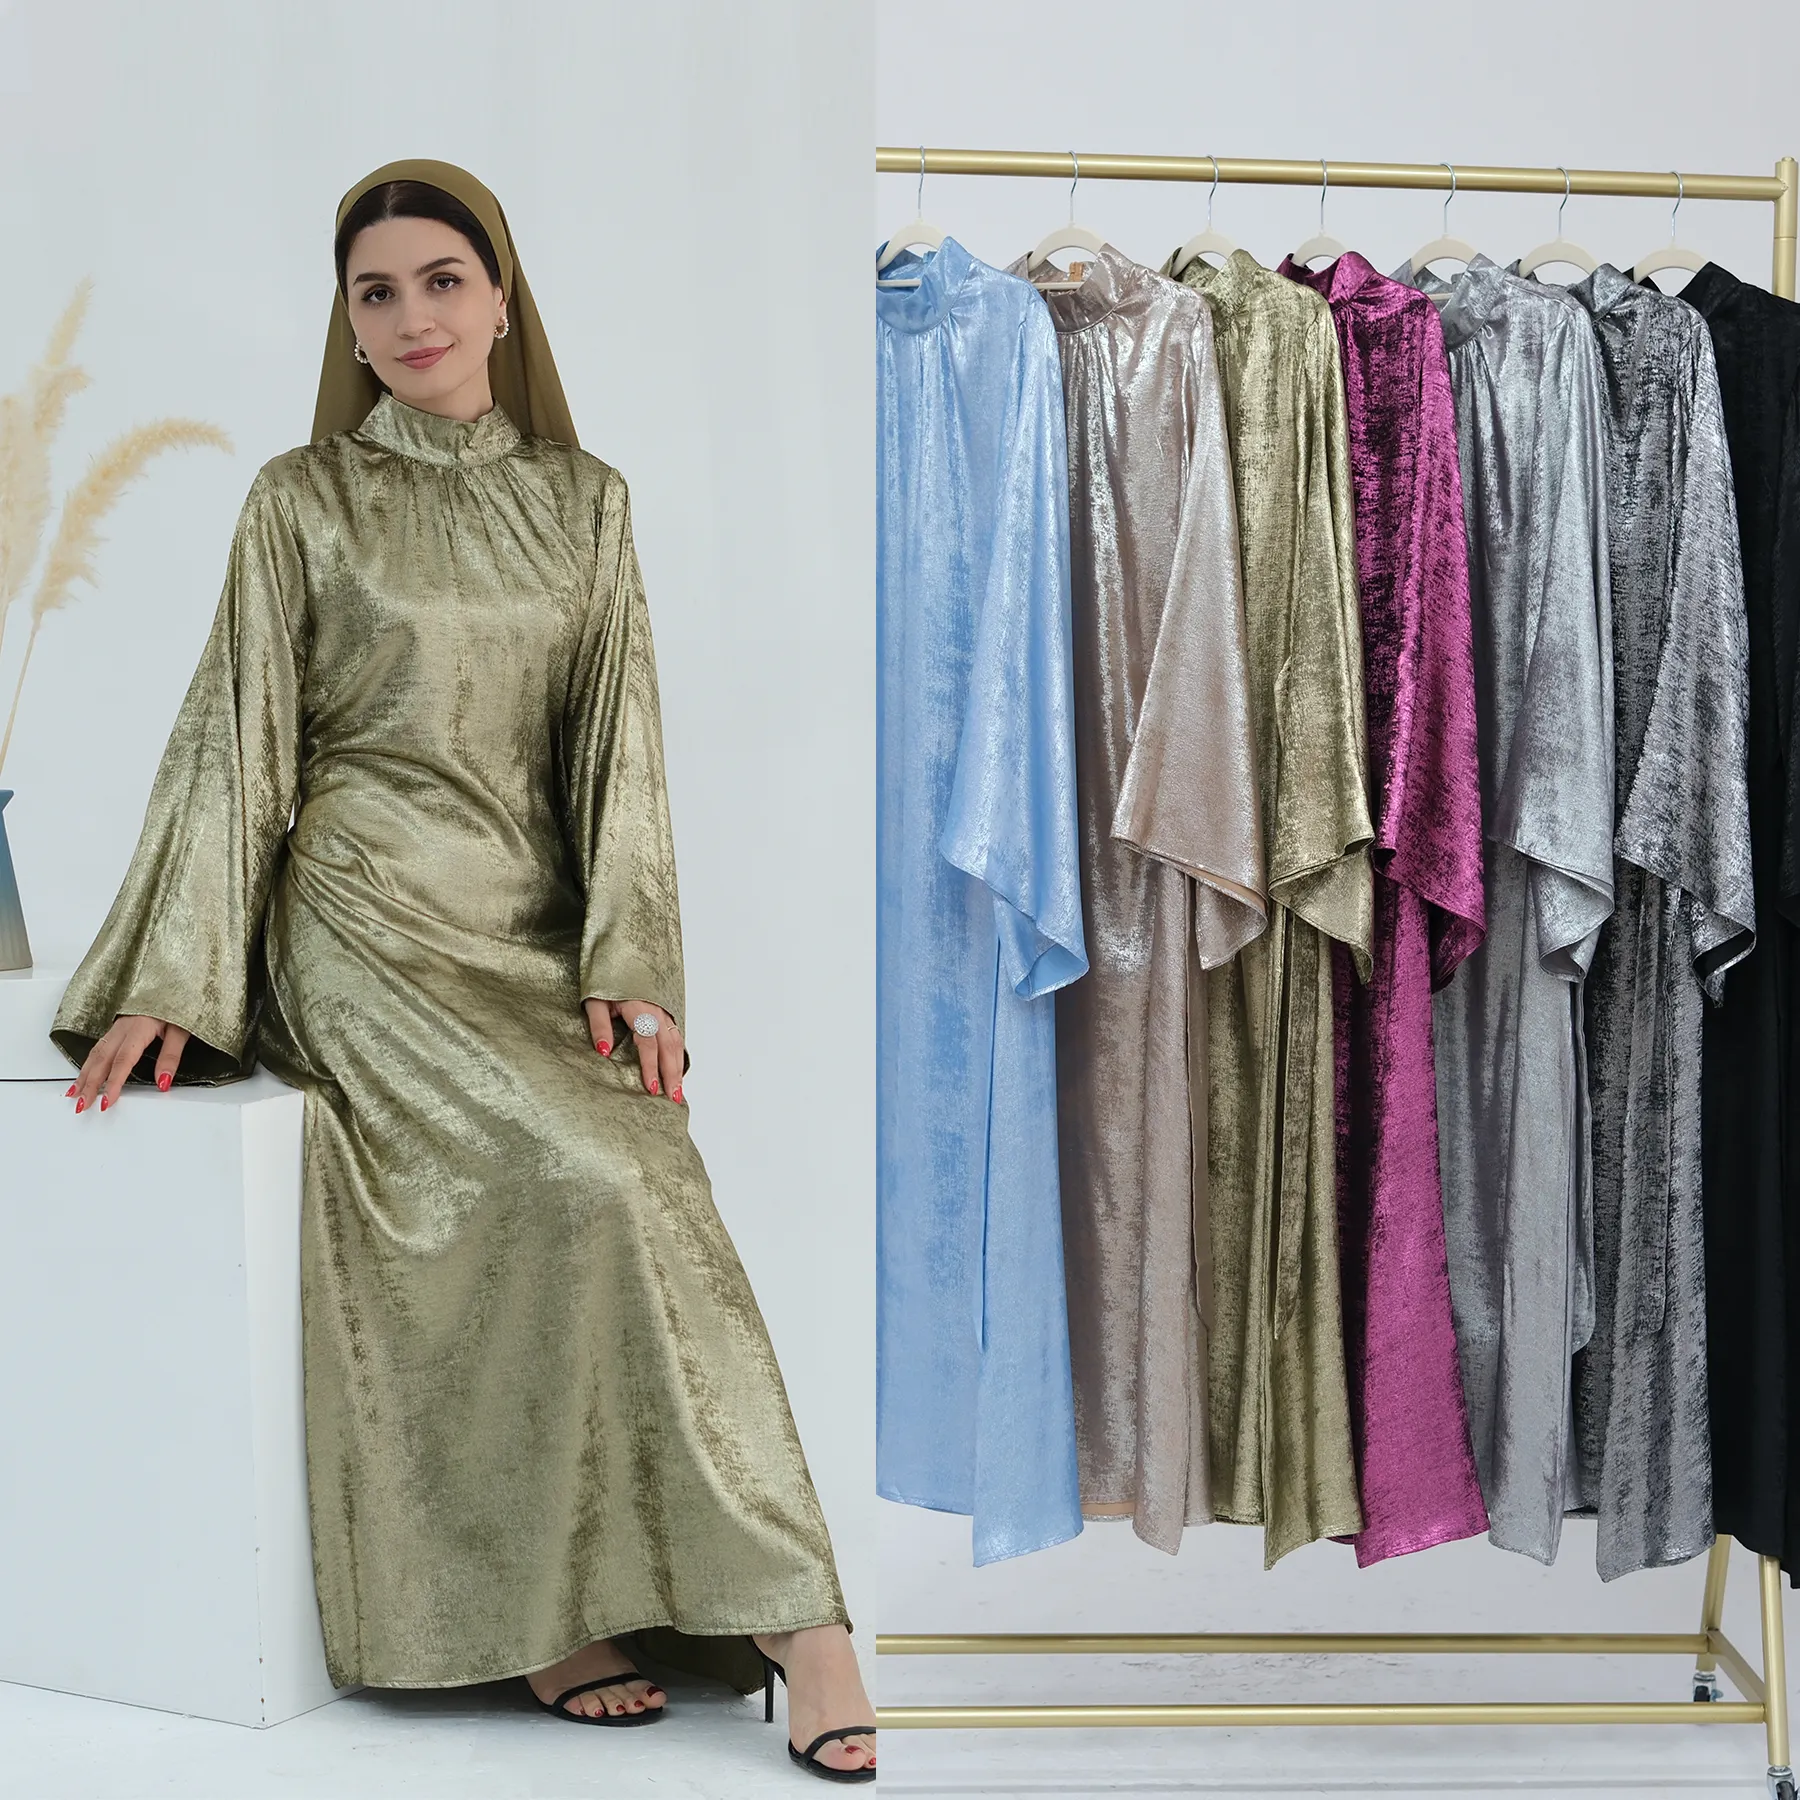 May New Arrival Summer Dresses Shinny Polyester Modest Abaya Women Muslim Dress Fashion Islamic Women Clothing Wholesale